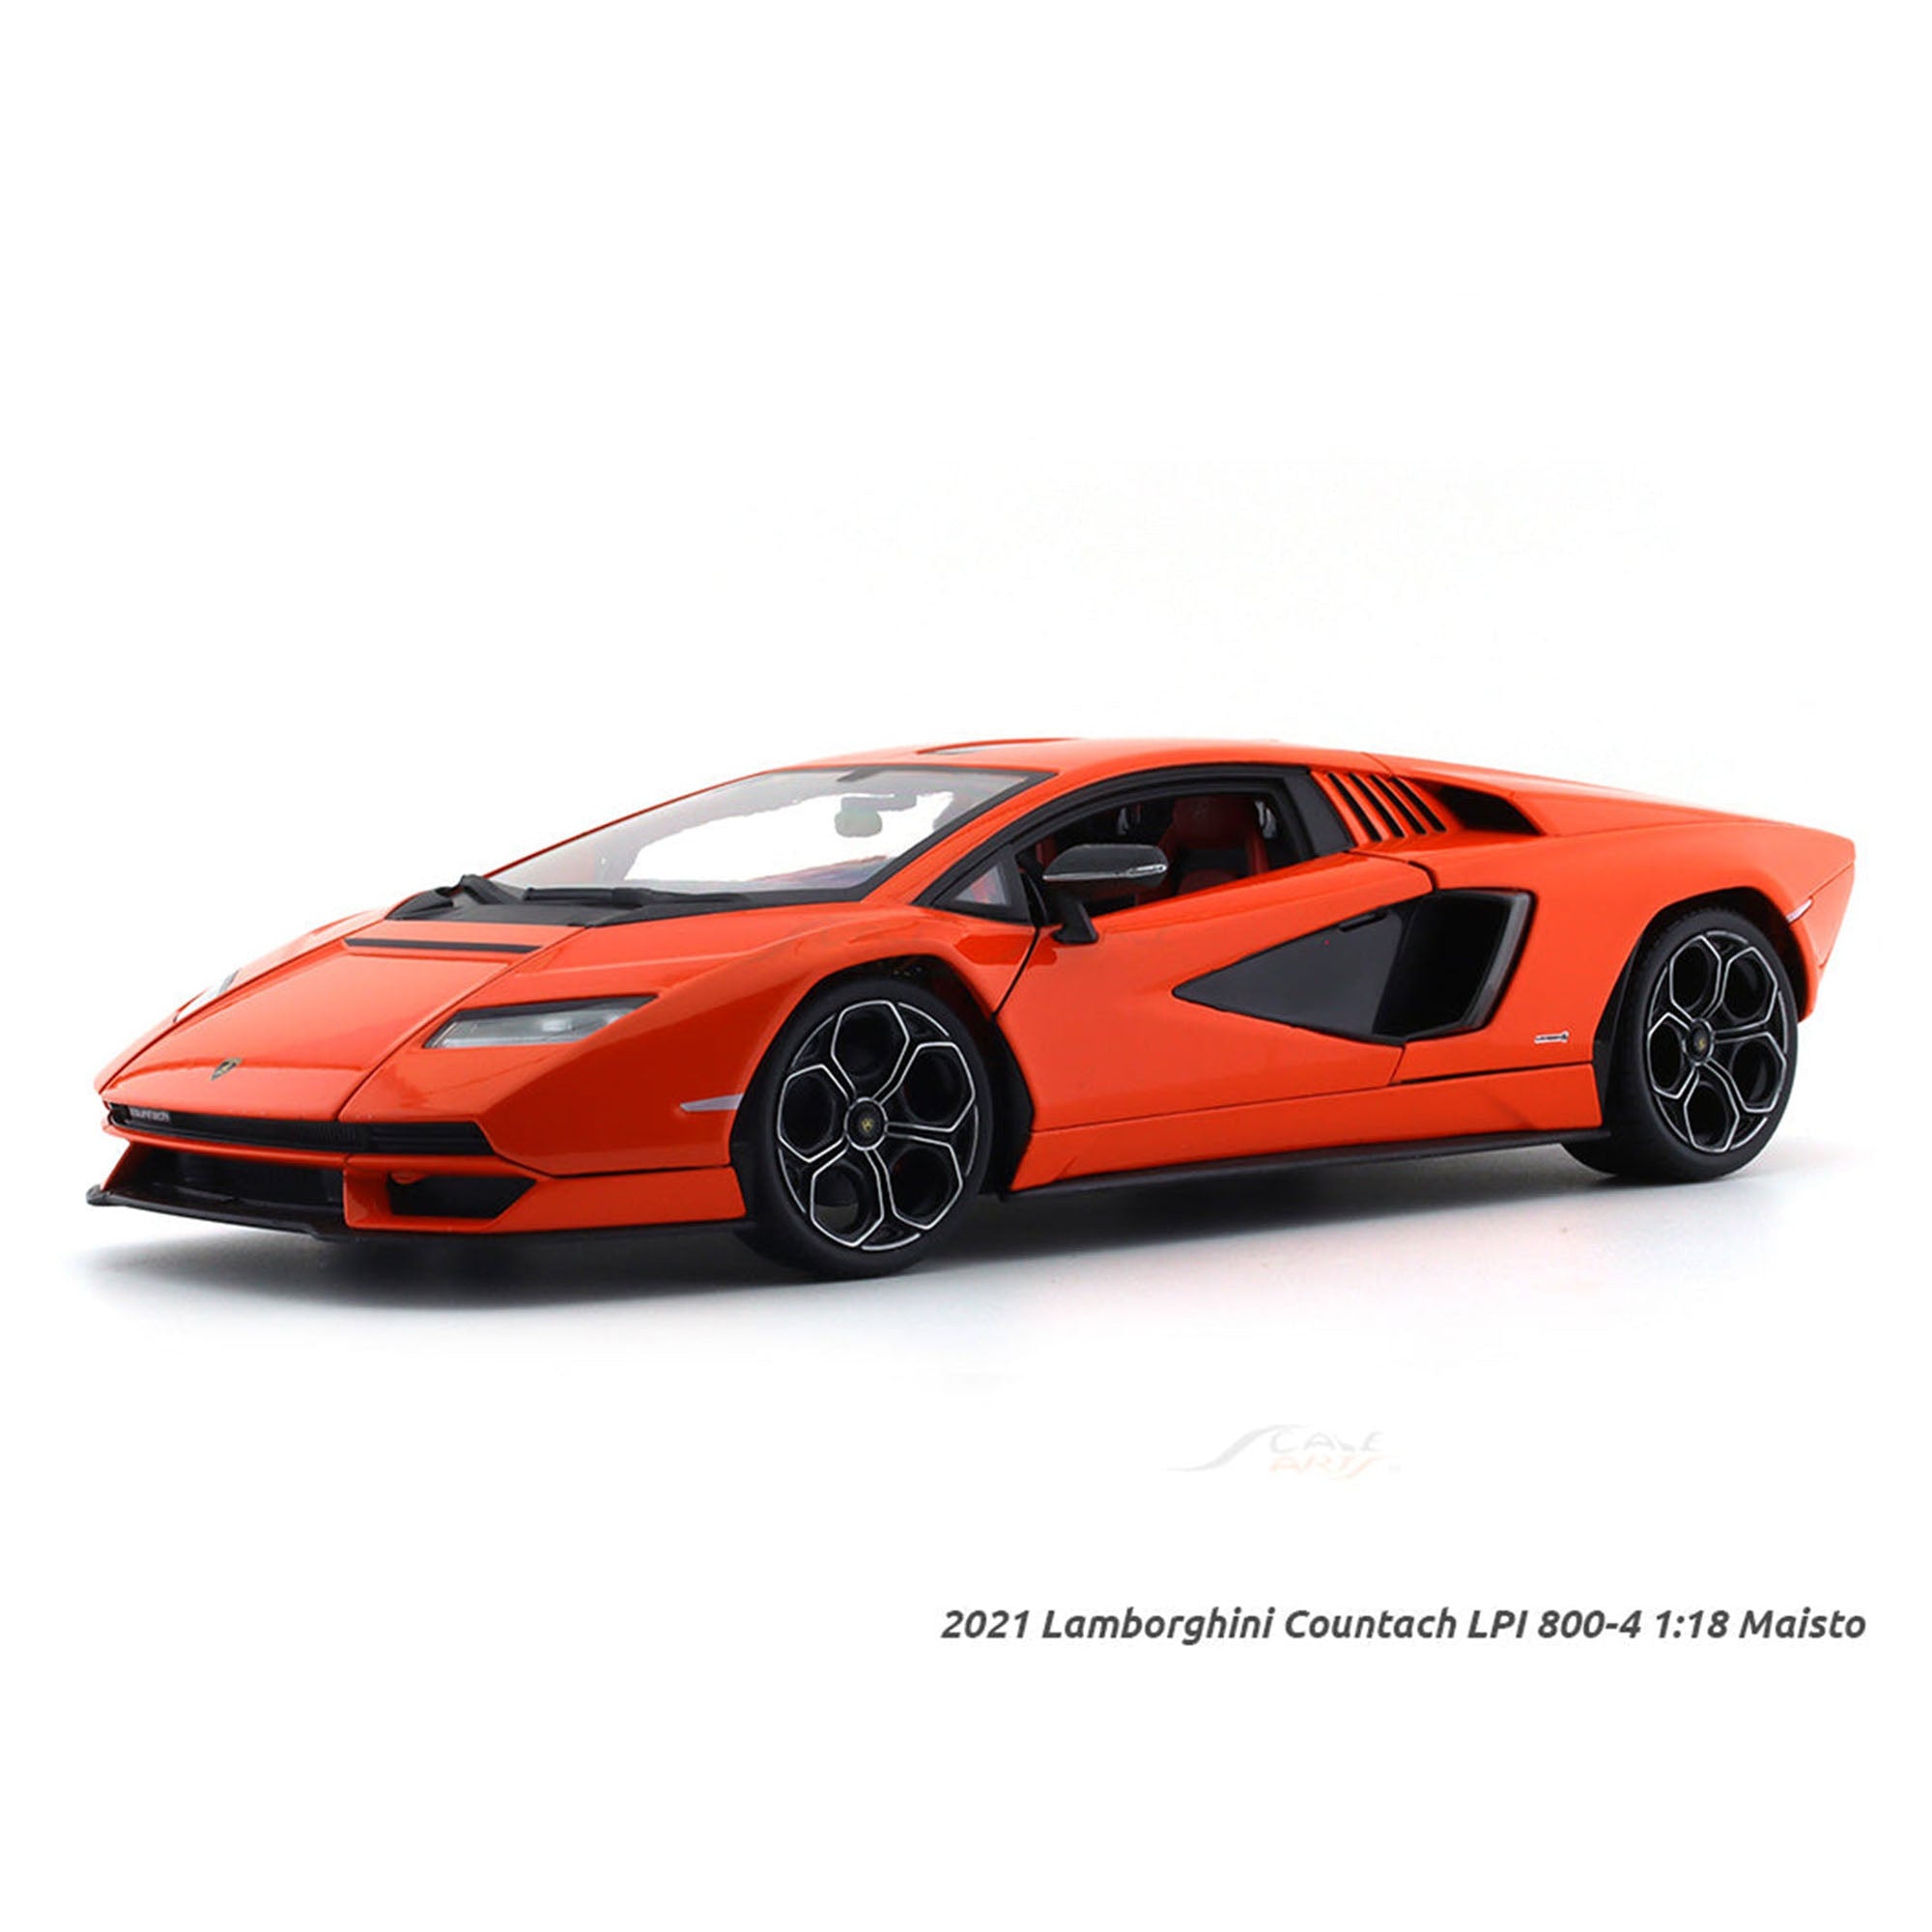 Maisto 1:18 2021 Lamborghini Countach LPI 800-4 Orange